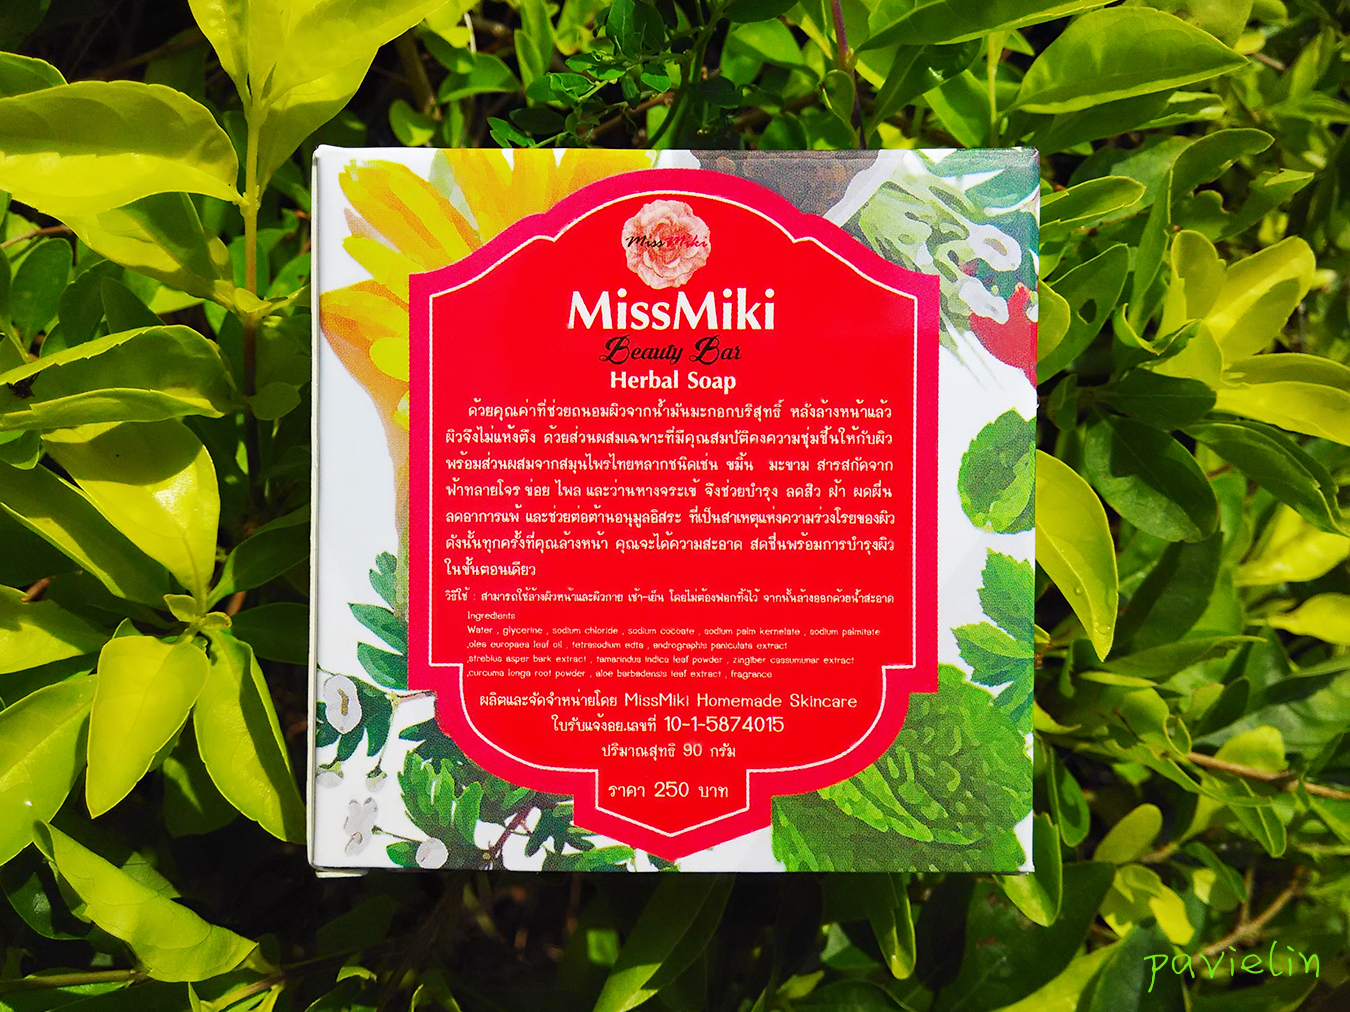 #MissMiki #Beauty #Bar #Herbal #Soap